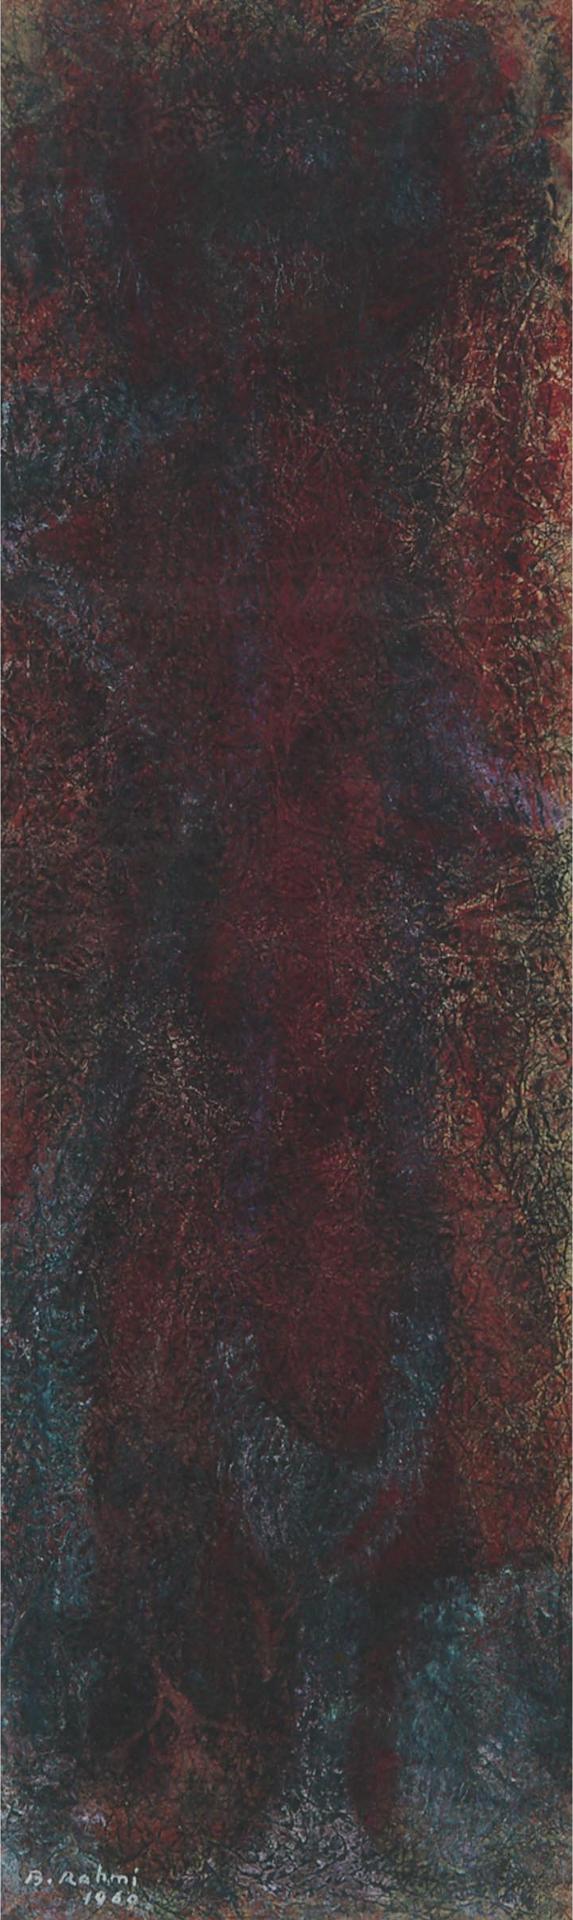 Bedri Rahmi Eyüboğlu (1911-1975) - Untitled (Red Abstract), 1960